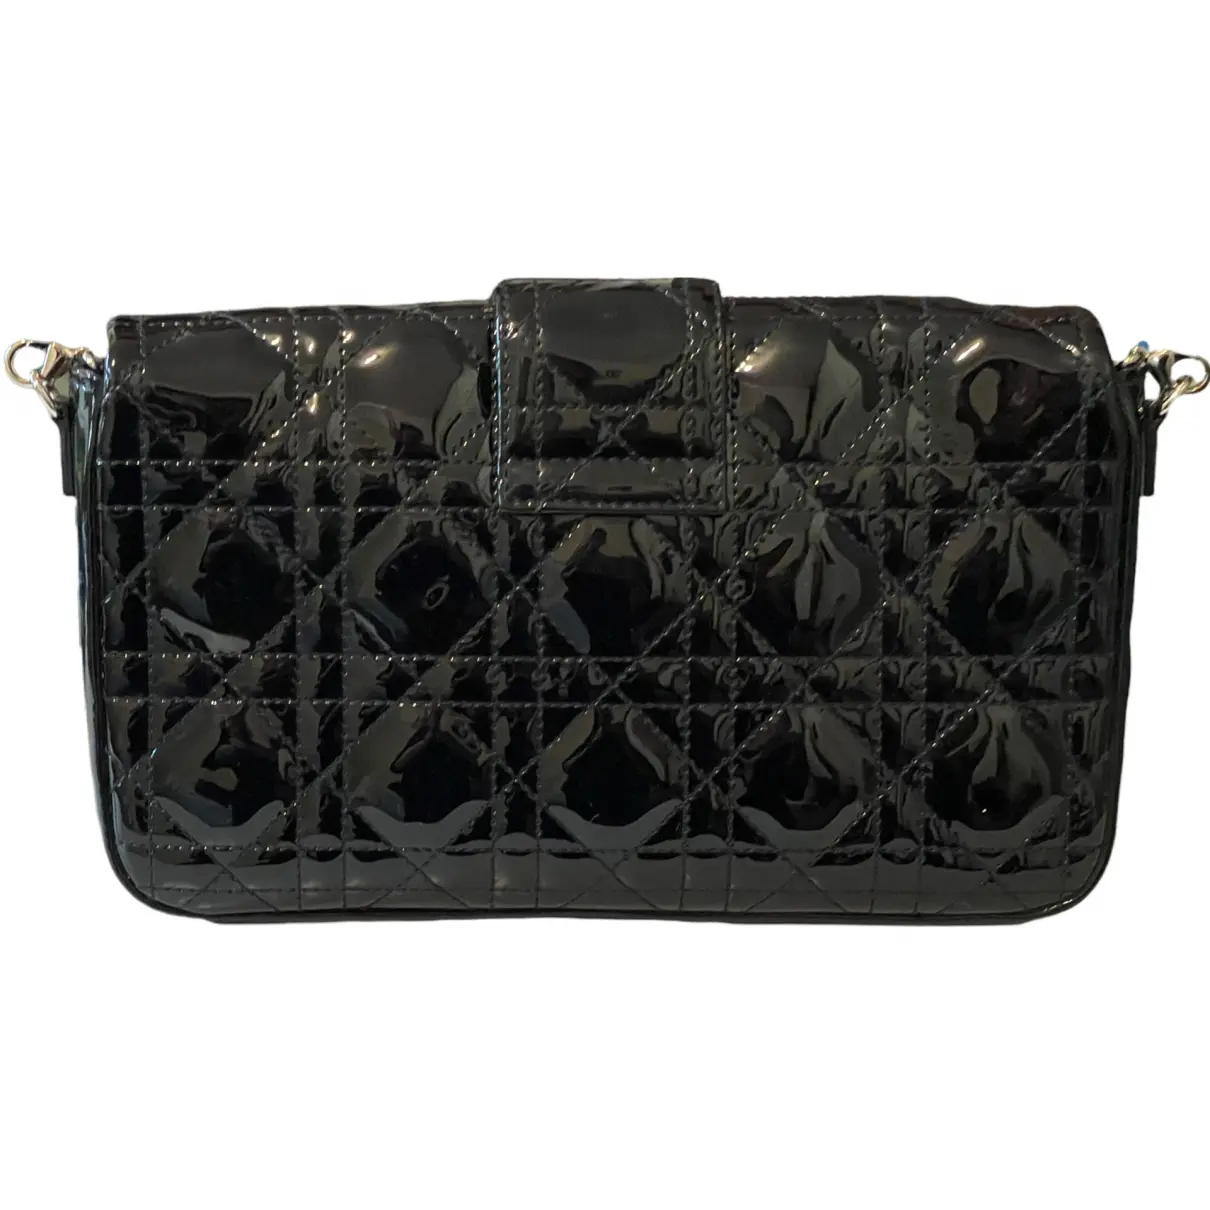 Buy Dior Leather crossbody bag online